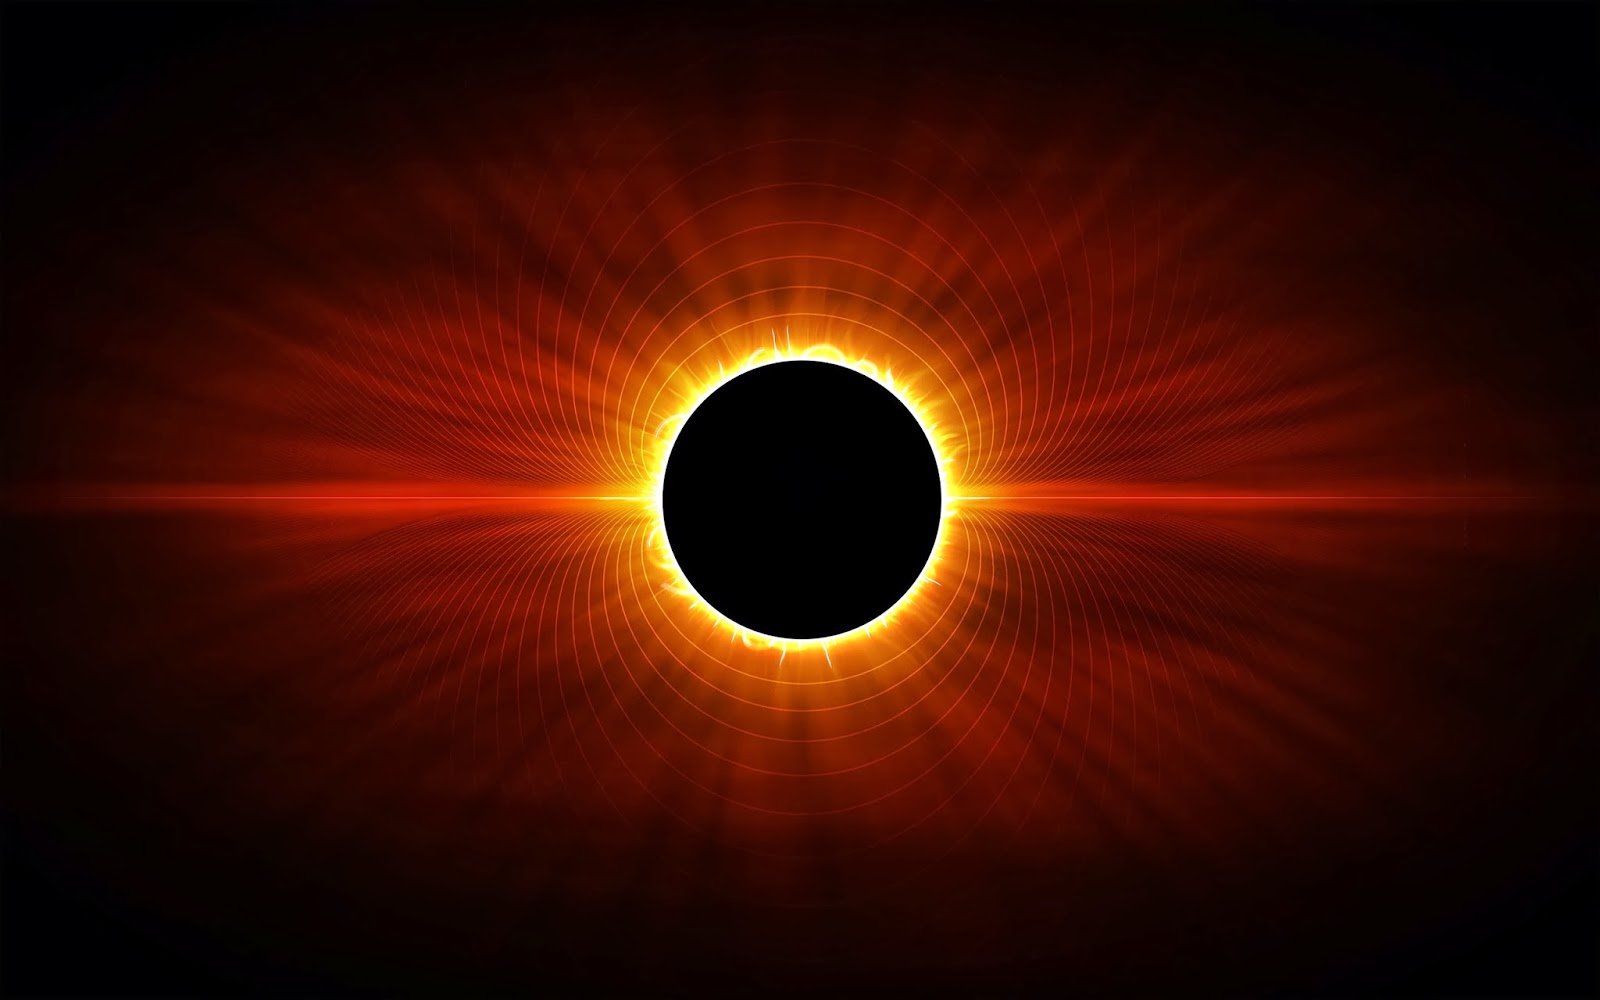 Solar Eclipse Pictures | Download Free Images on Unsplash